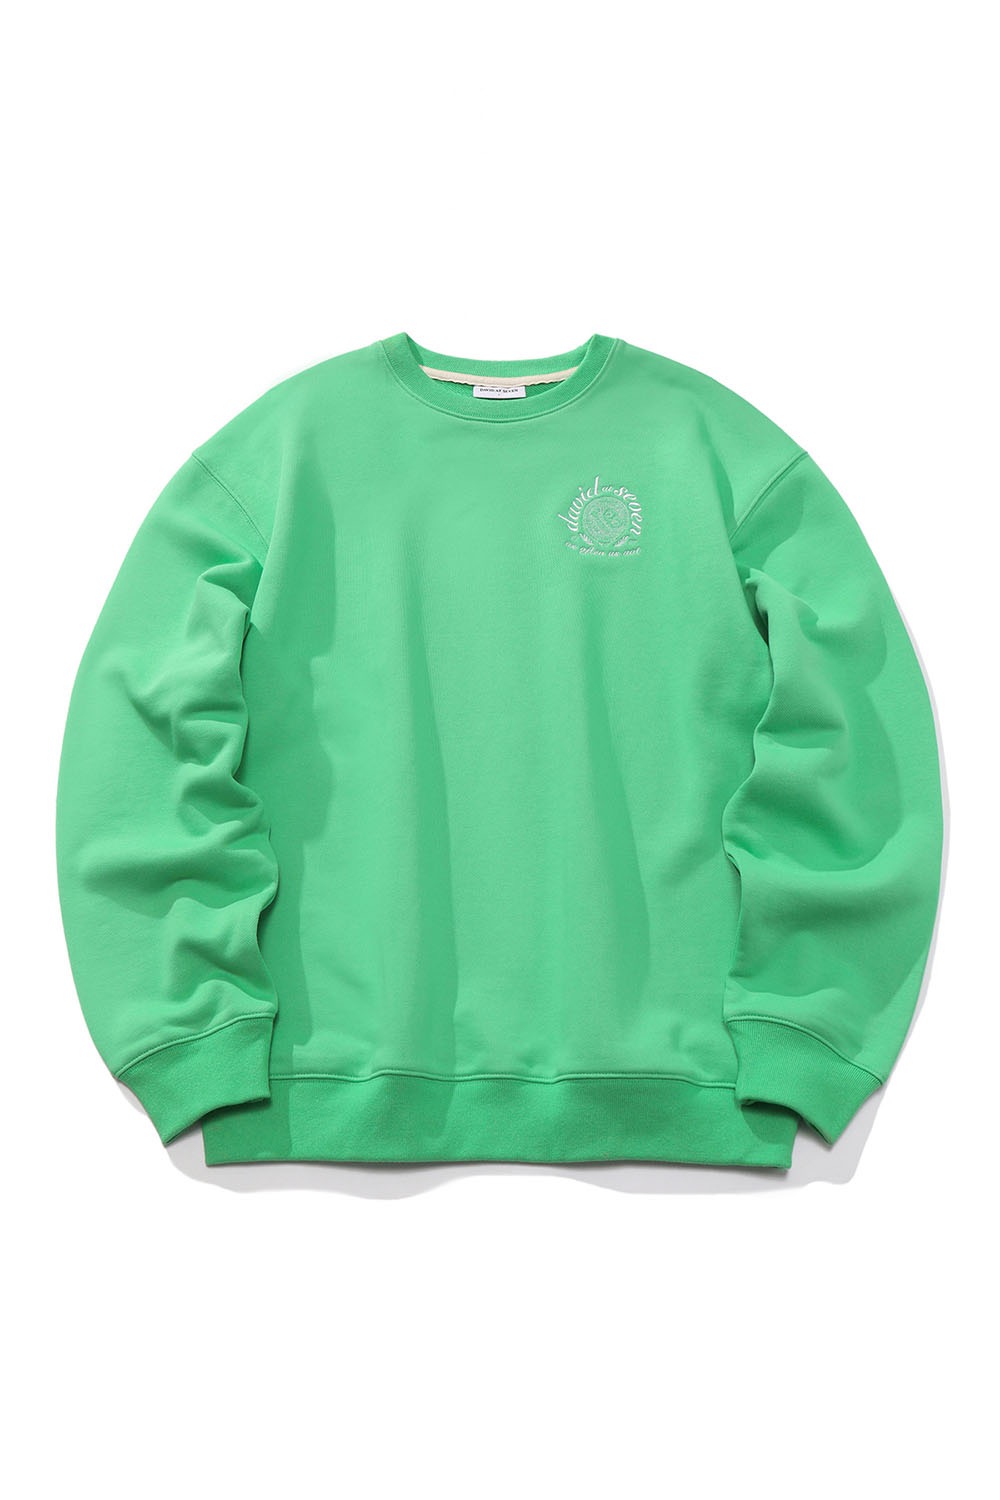 sunny-side up racket sweatshirts (green) RICHEZ